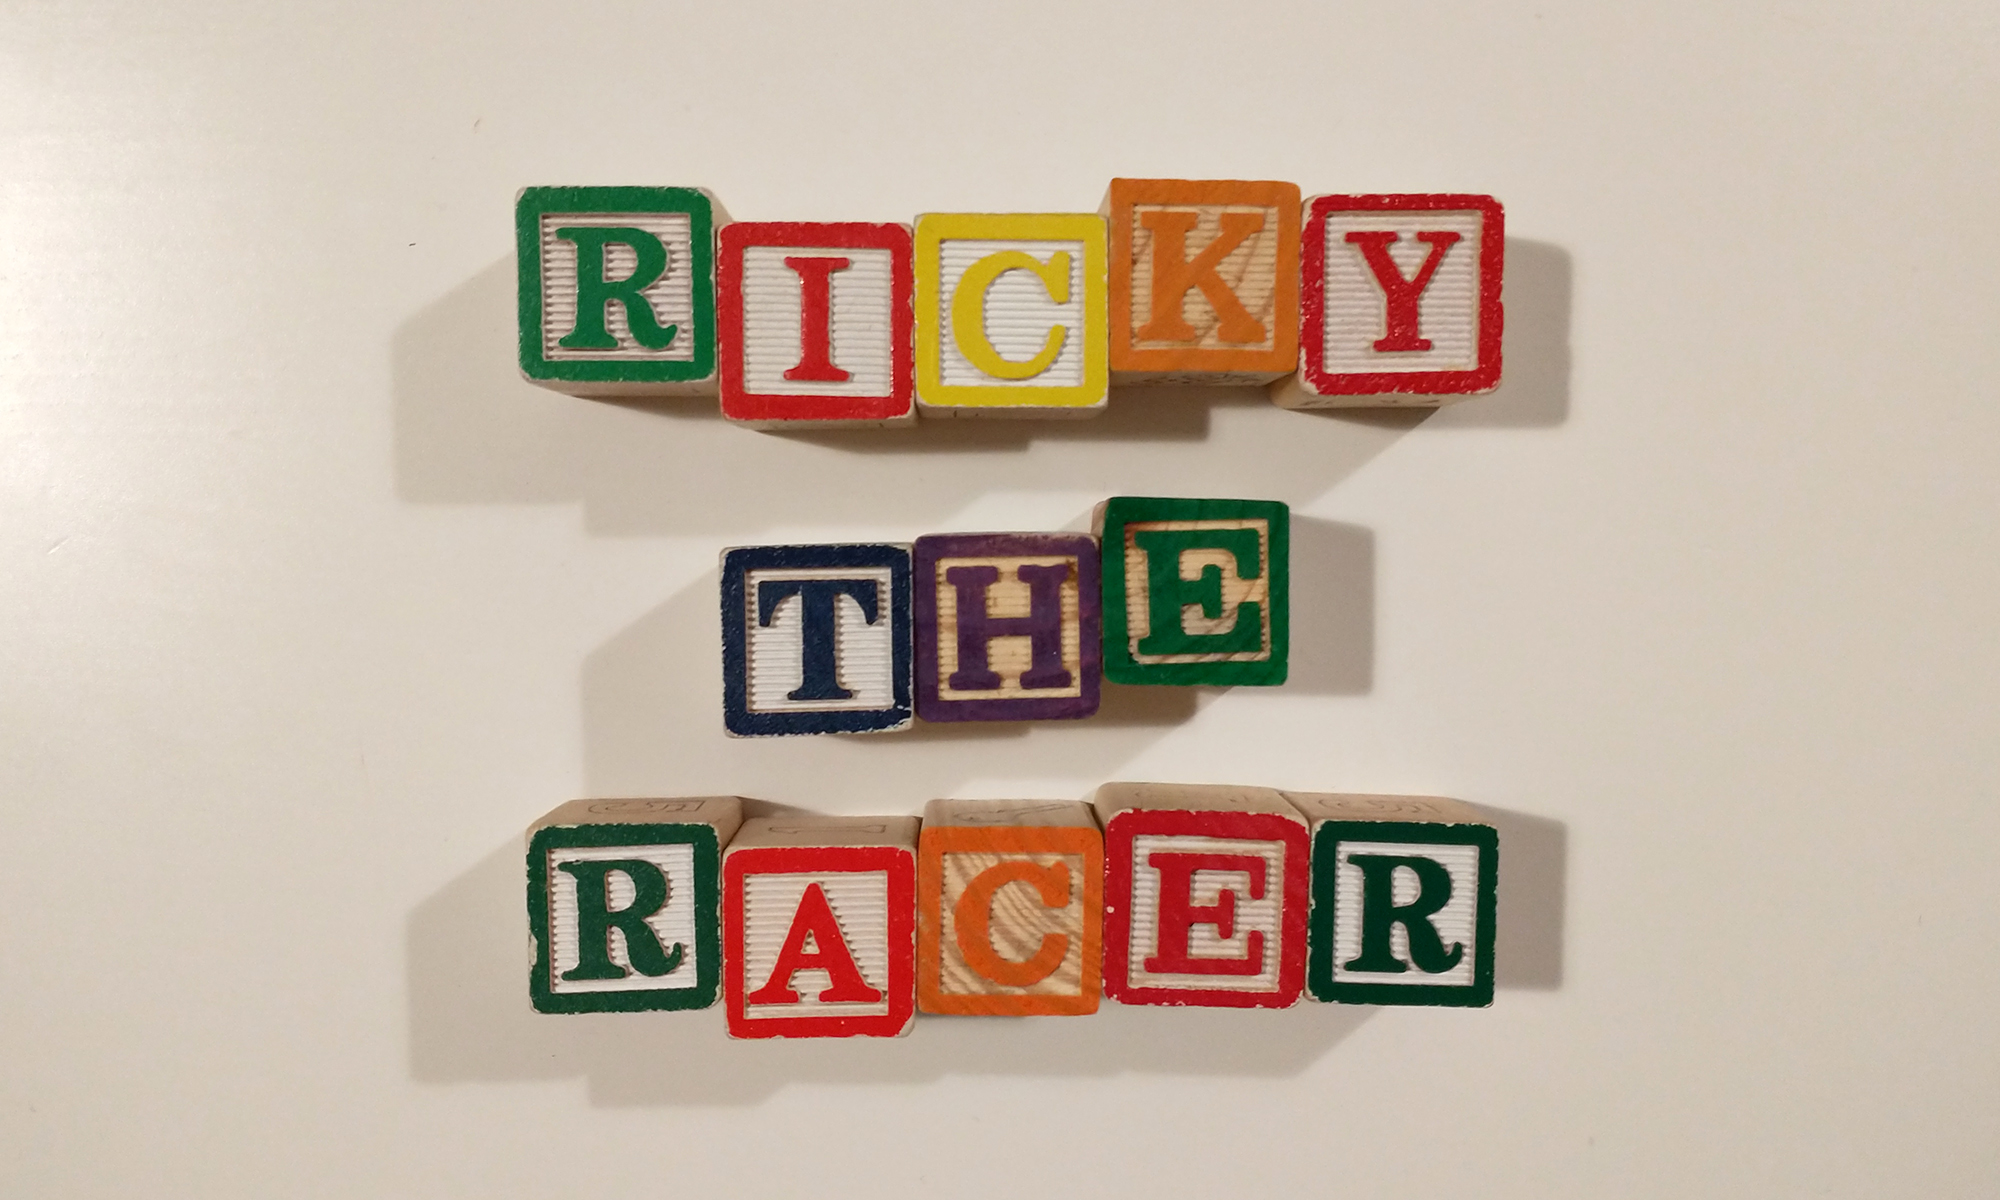 Ricky the Racer